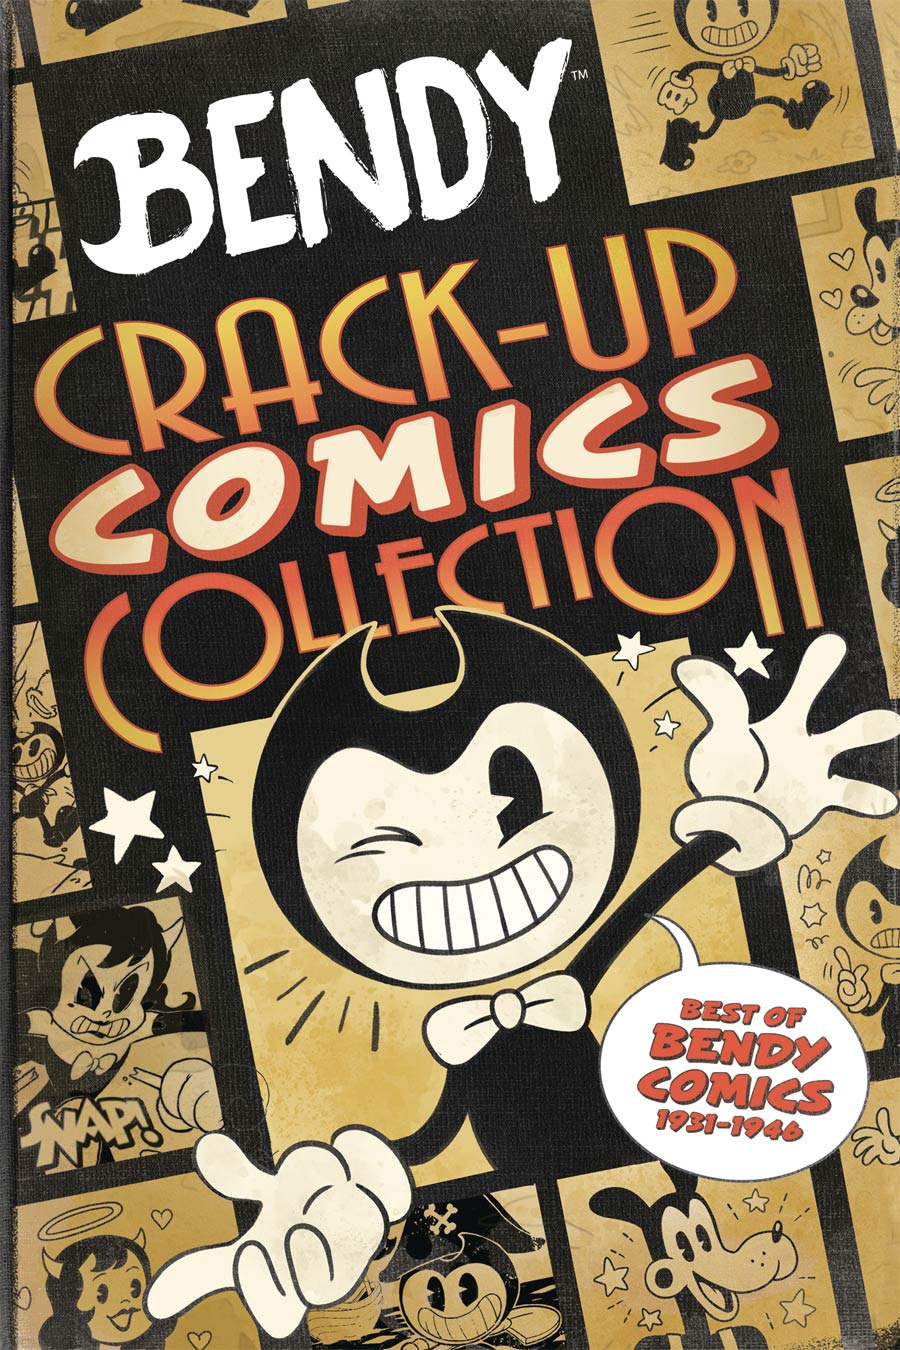 Bendy Crack-Up Comics Collection TP